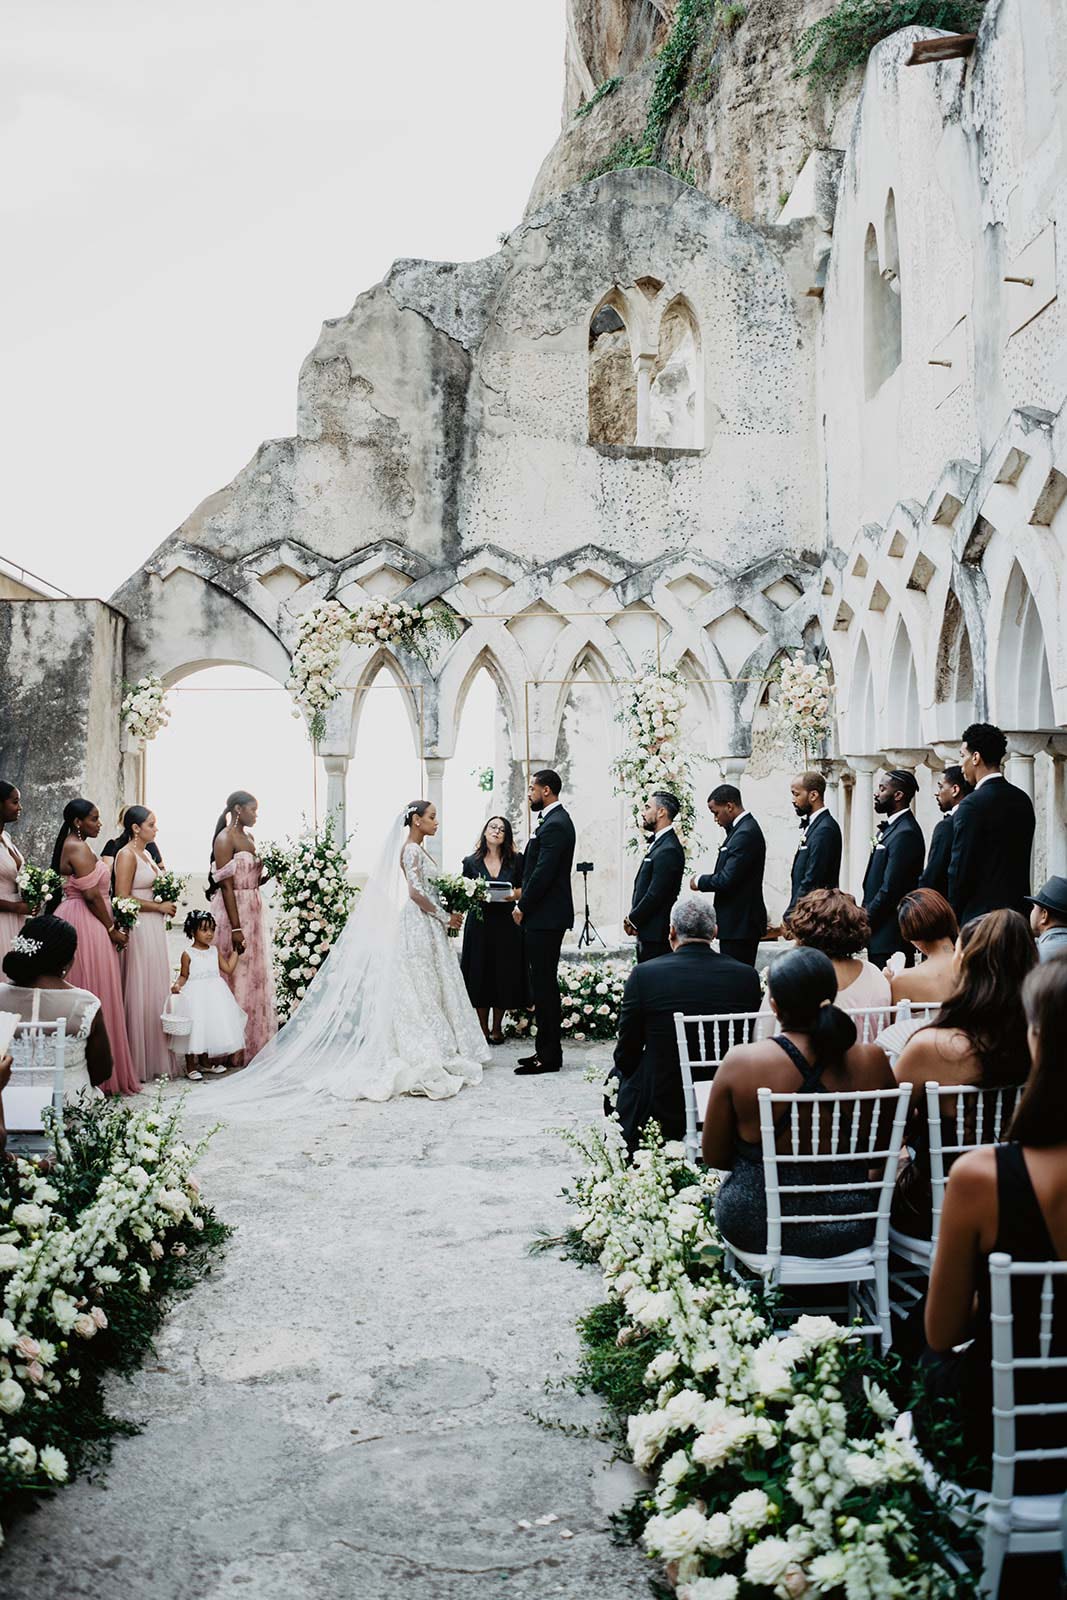 A stylish wedding in a historic cloister on the Amalfi Coast :: 19